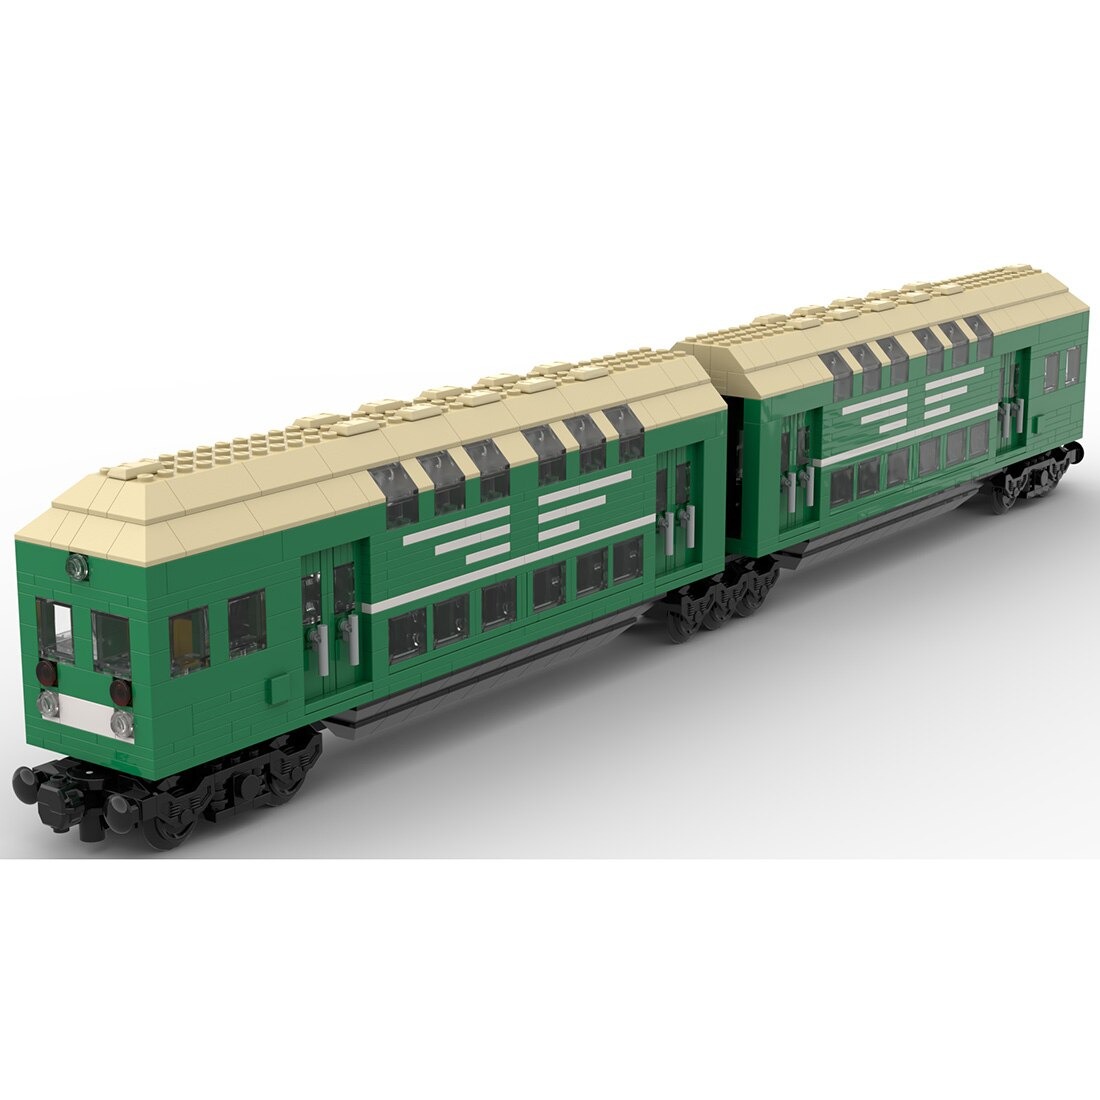 authorized moc 109281 7 axle train carri main 5 - ZHEGAO Block